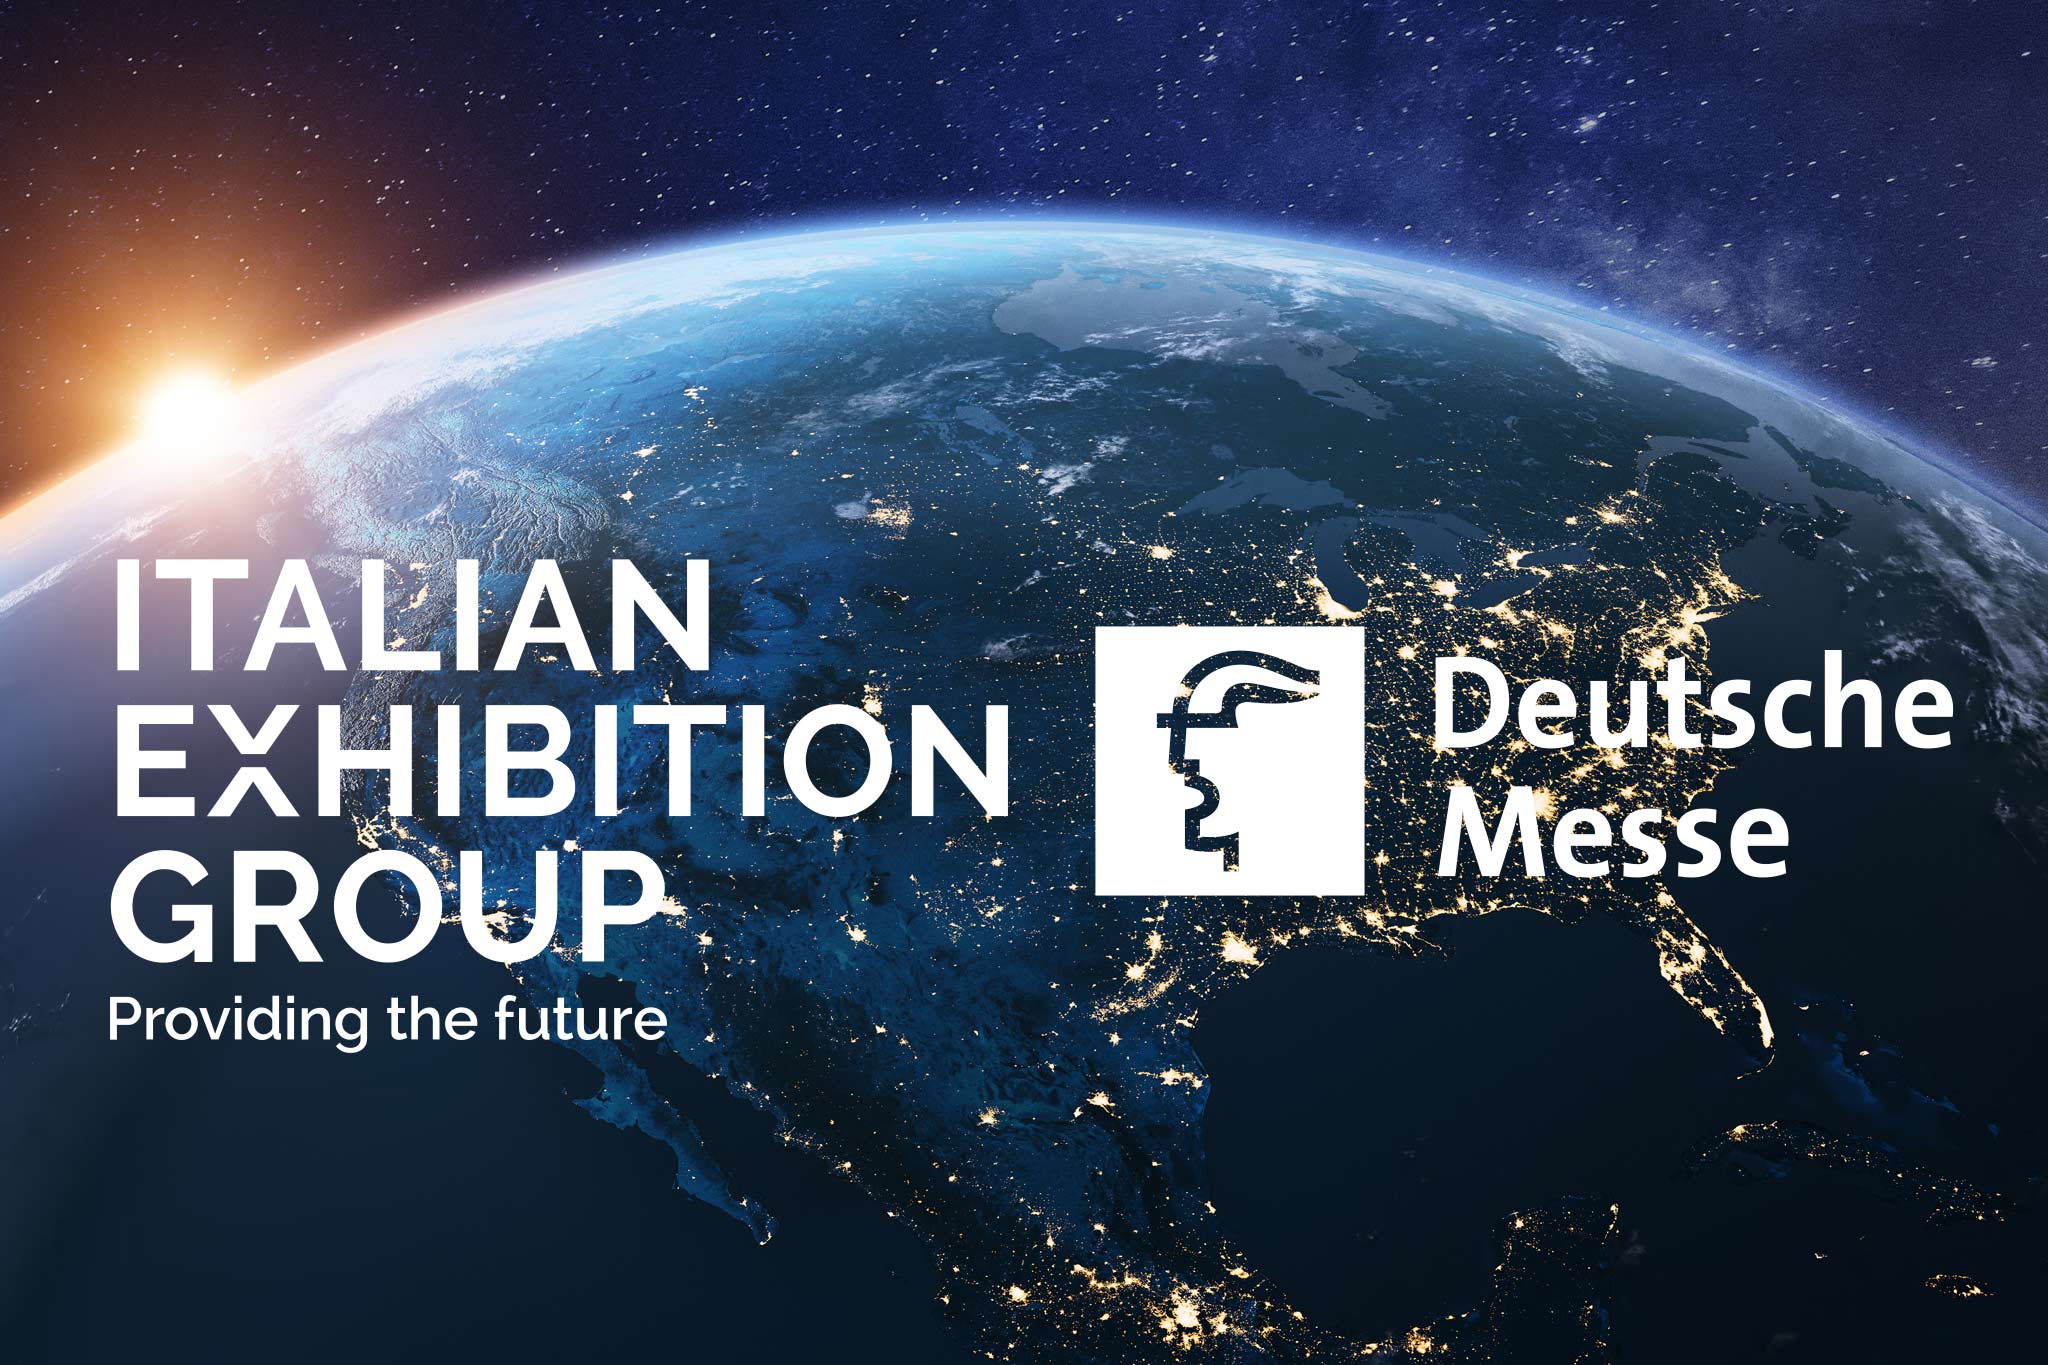 Italian Exhibition Group Lands in North America With Deutsche Messe